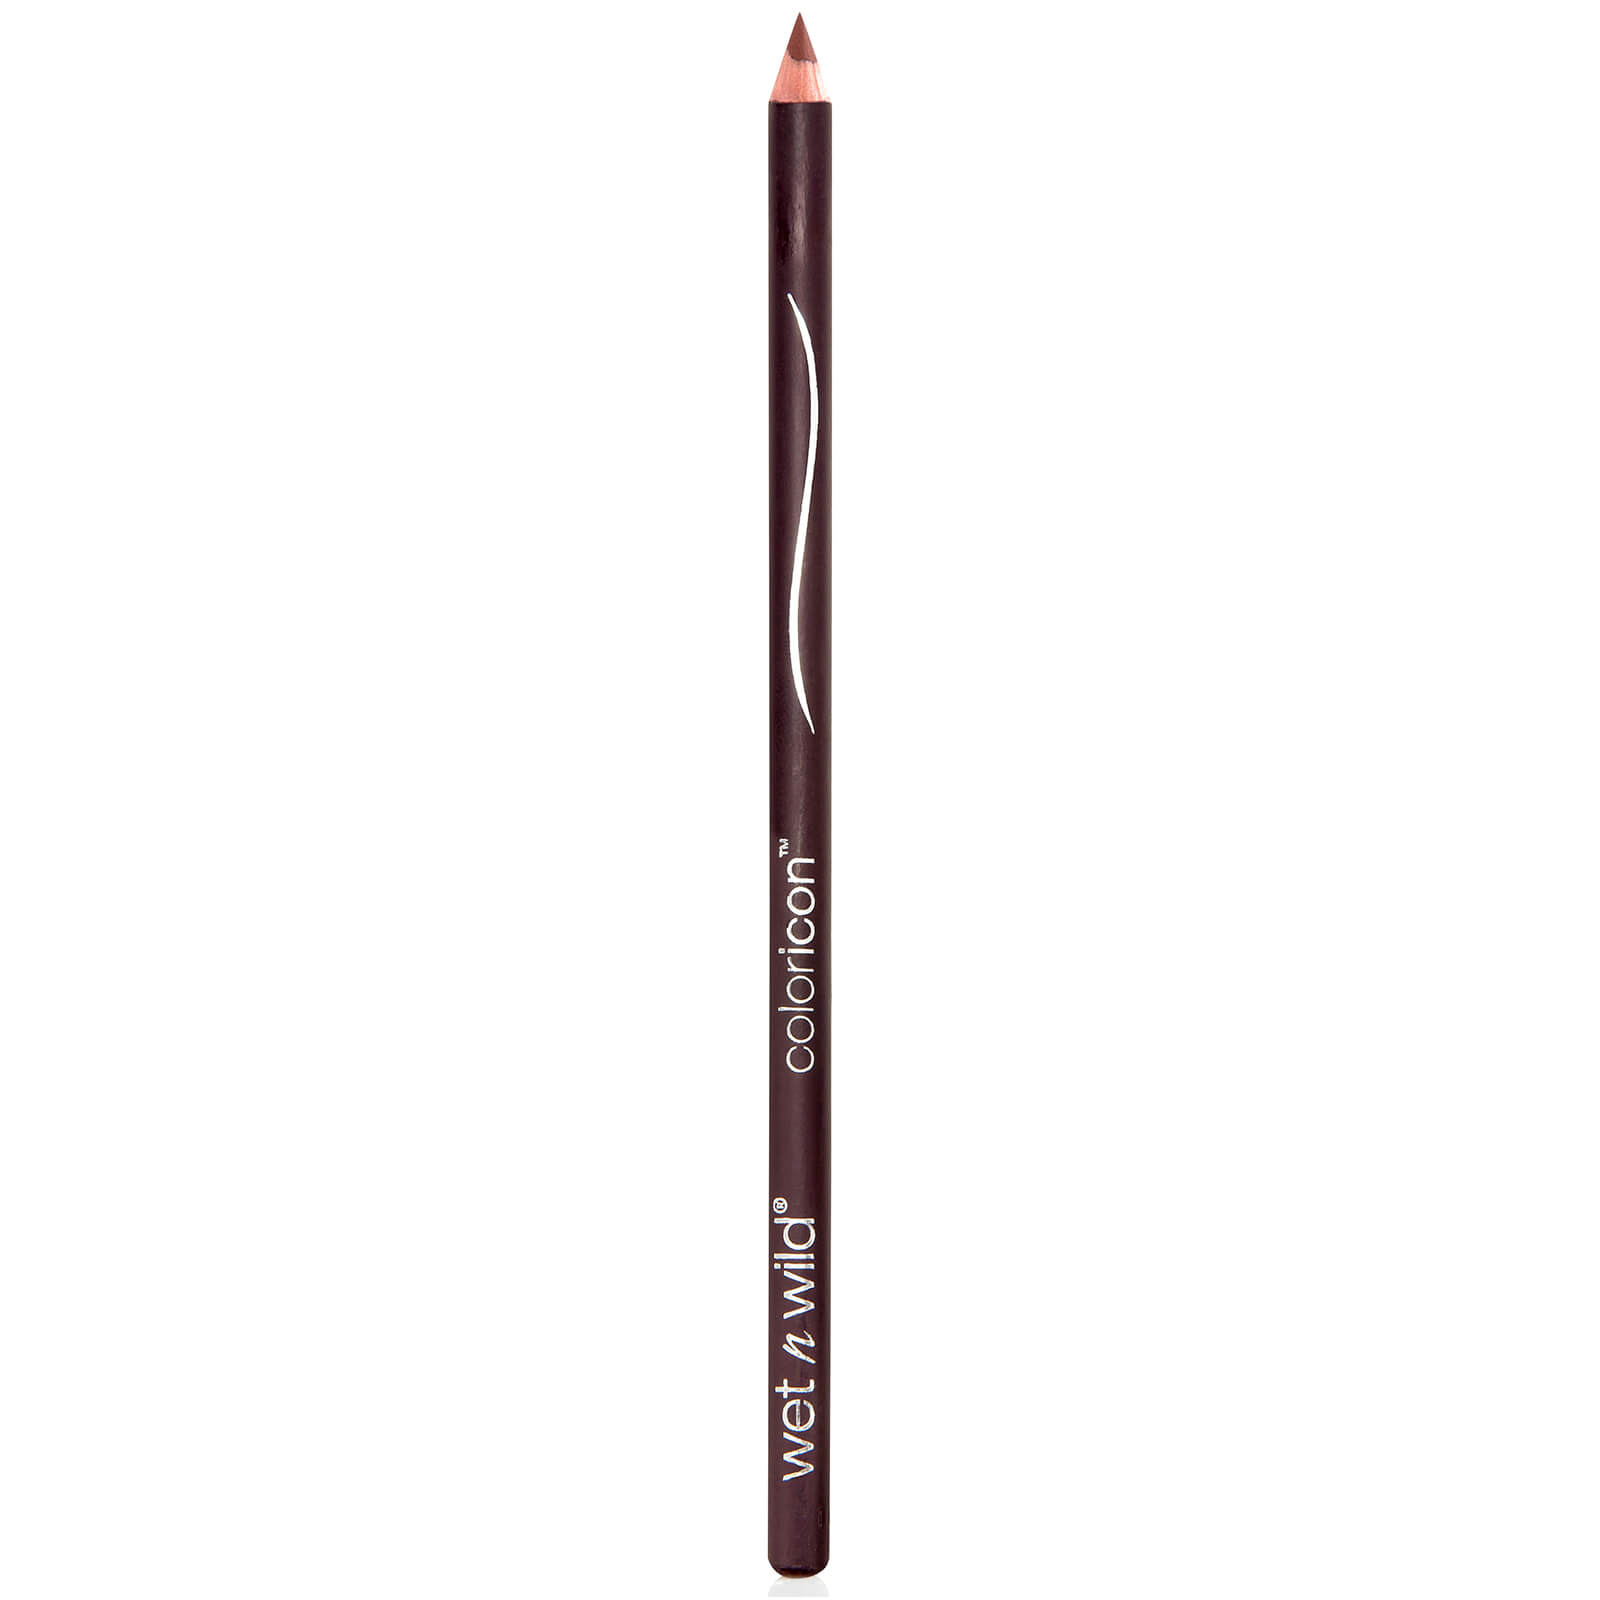 wet n wild coloricon Lipliner Pencil 1.4g (Various Shades) - Chestnut